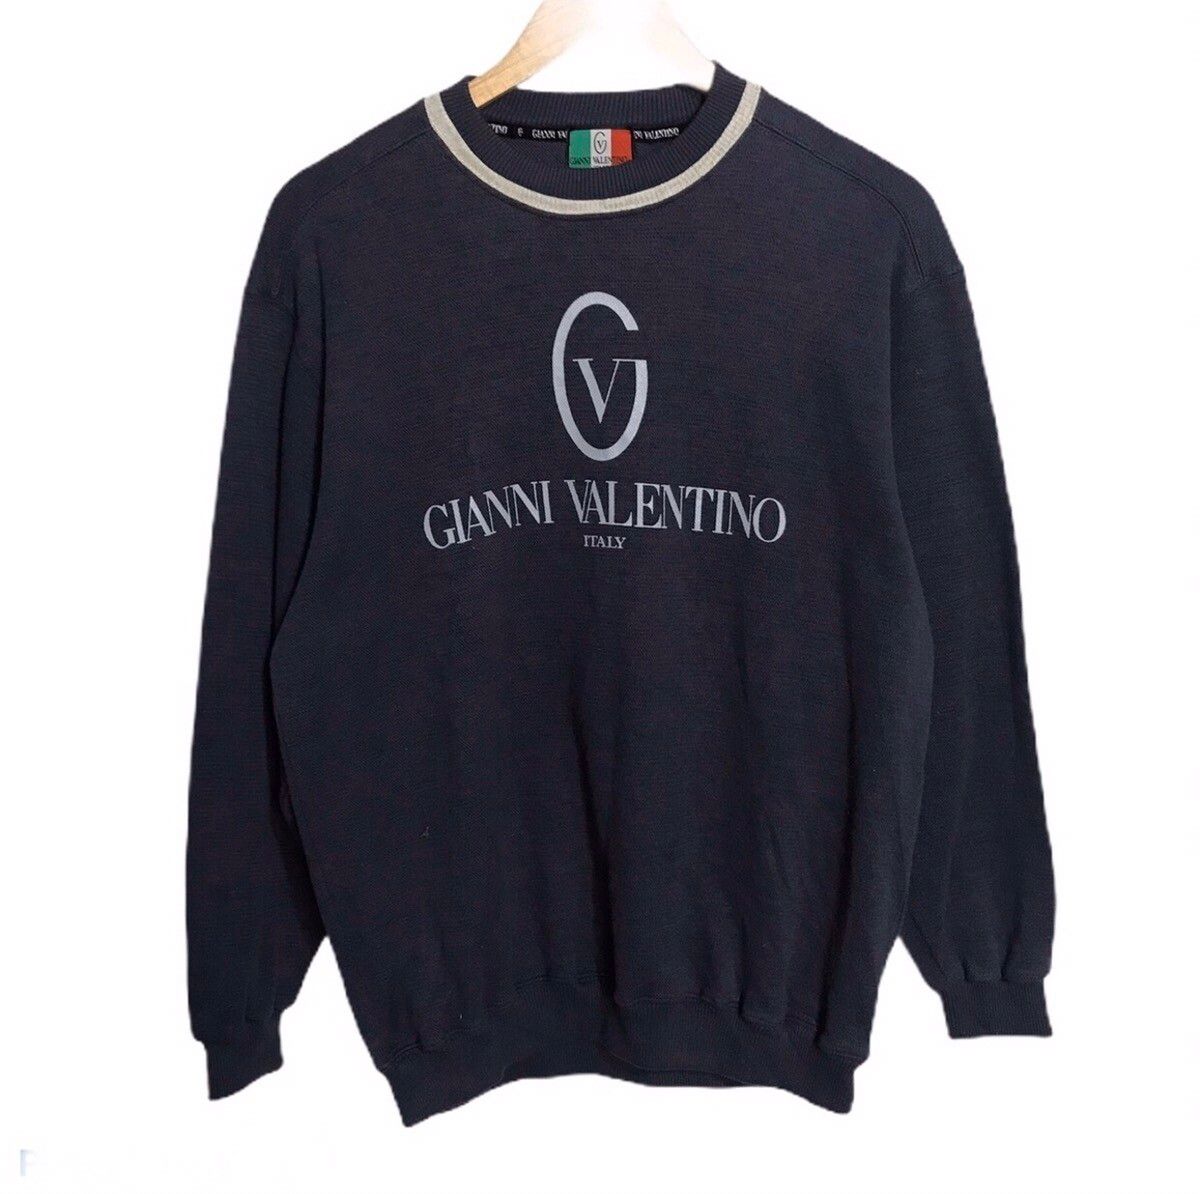 Gianni valentino big logo crewneck sweatshirt - 1